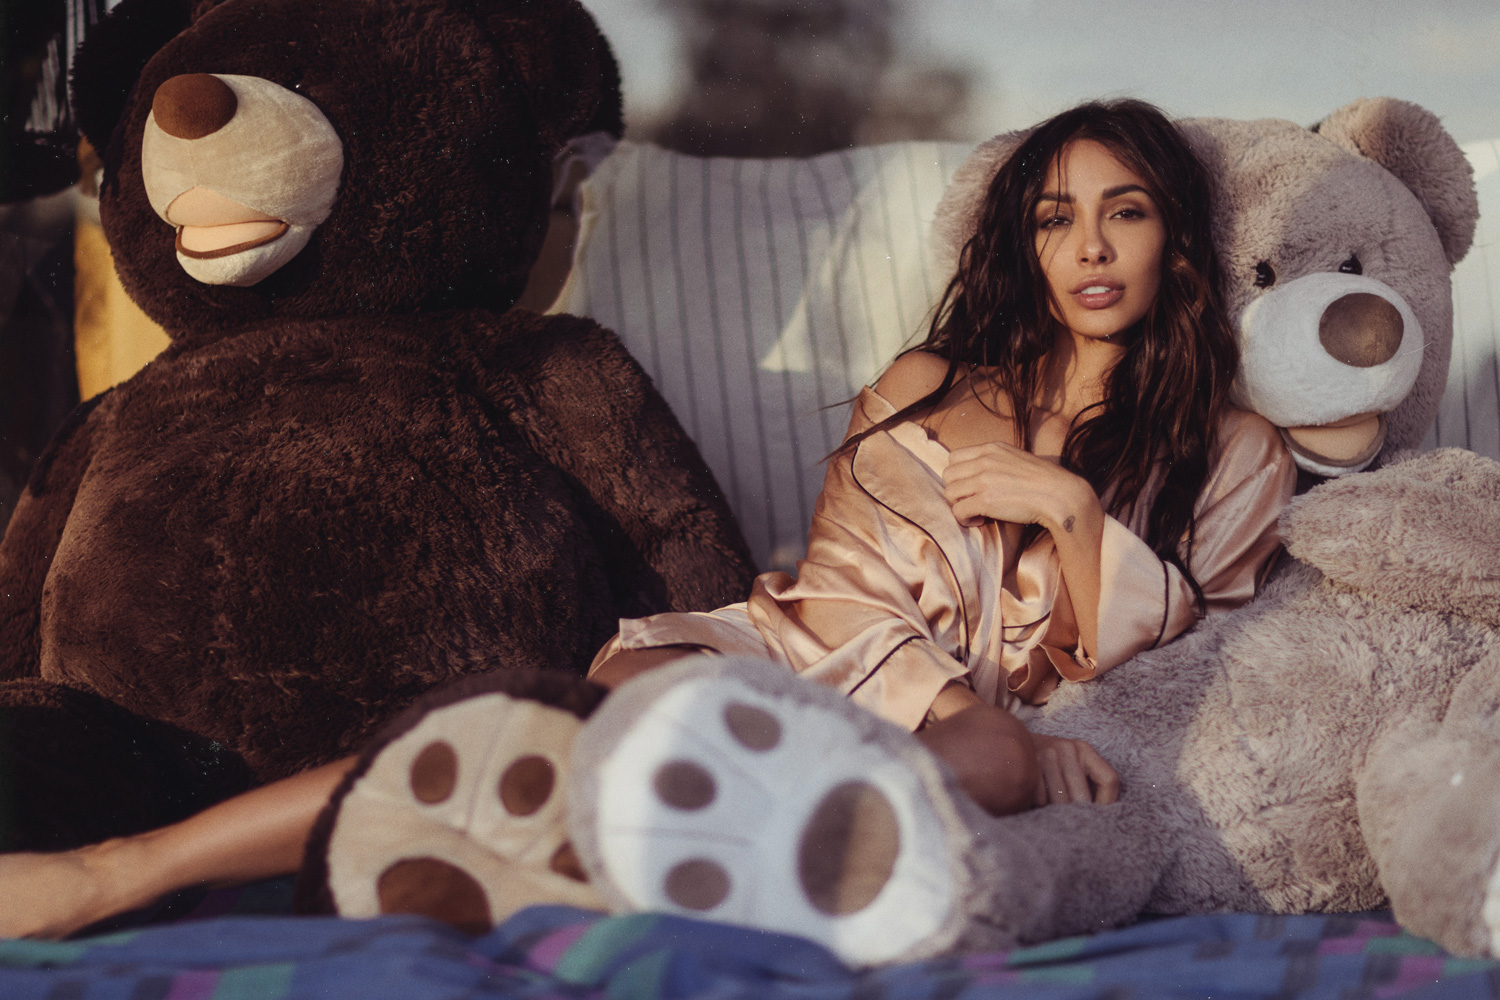 Women Model Brunette Bathrobes Teddy Bears In Bed Looking At Viewer Michele Maturo 1500x1000